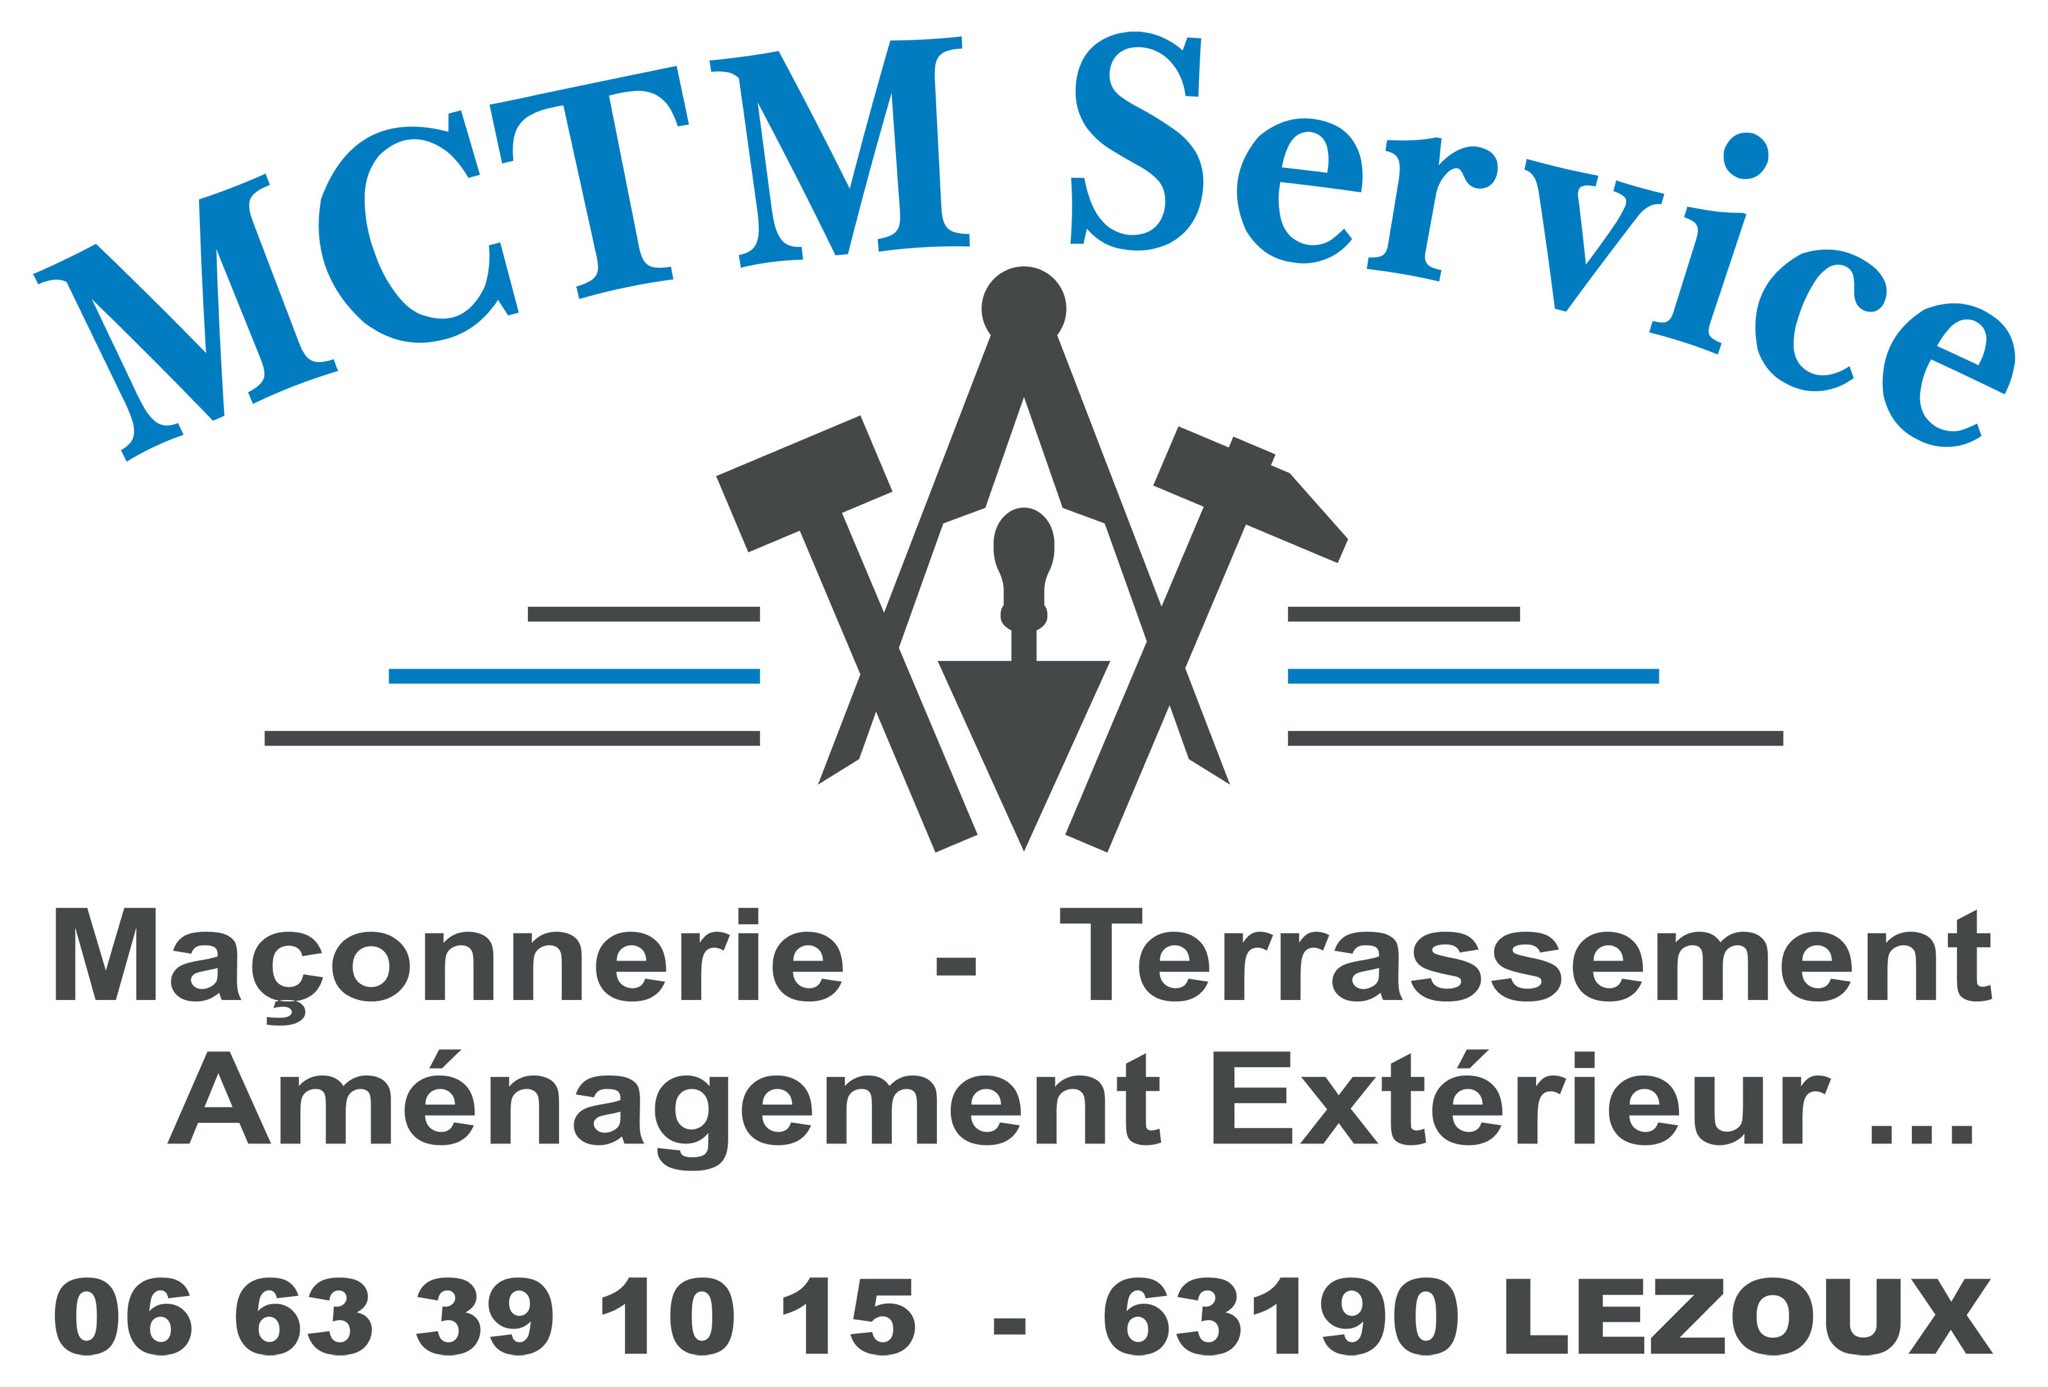 Mctm Service